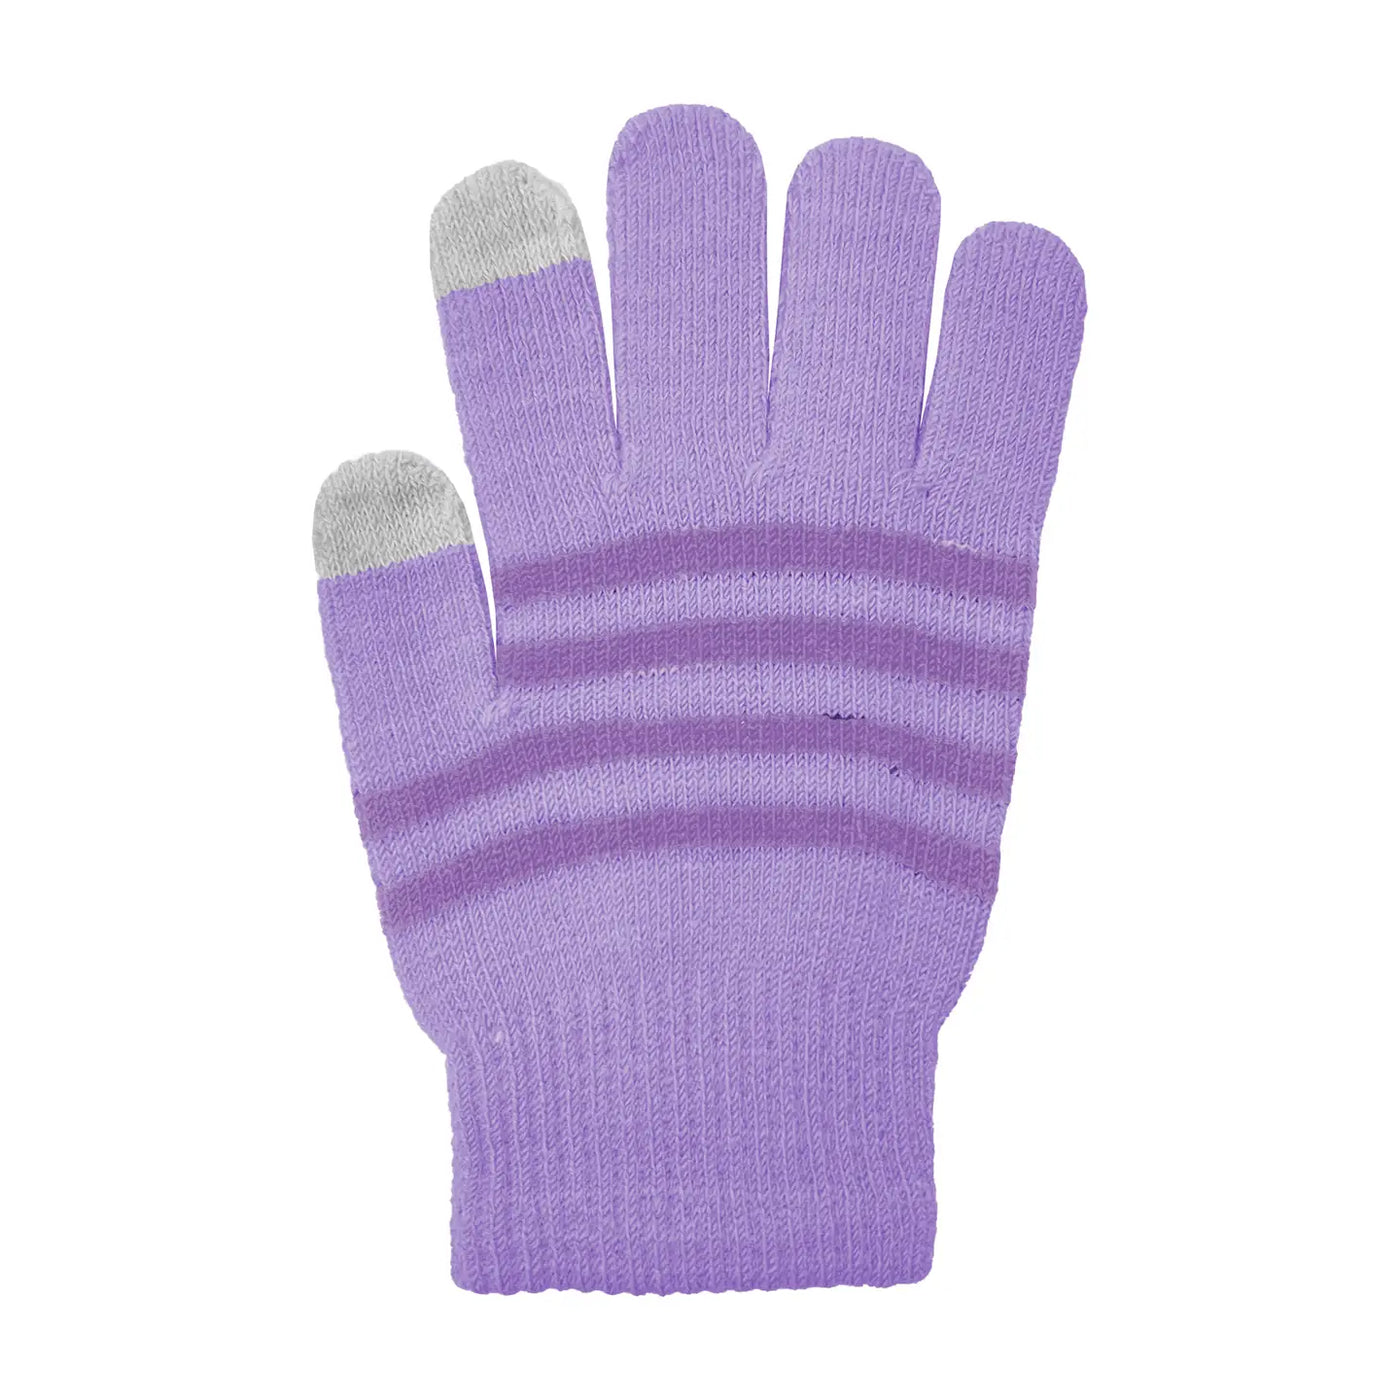 Kids Touchscreen Striped Stretch Gloves